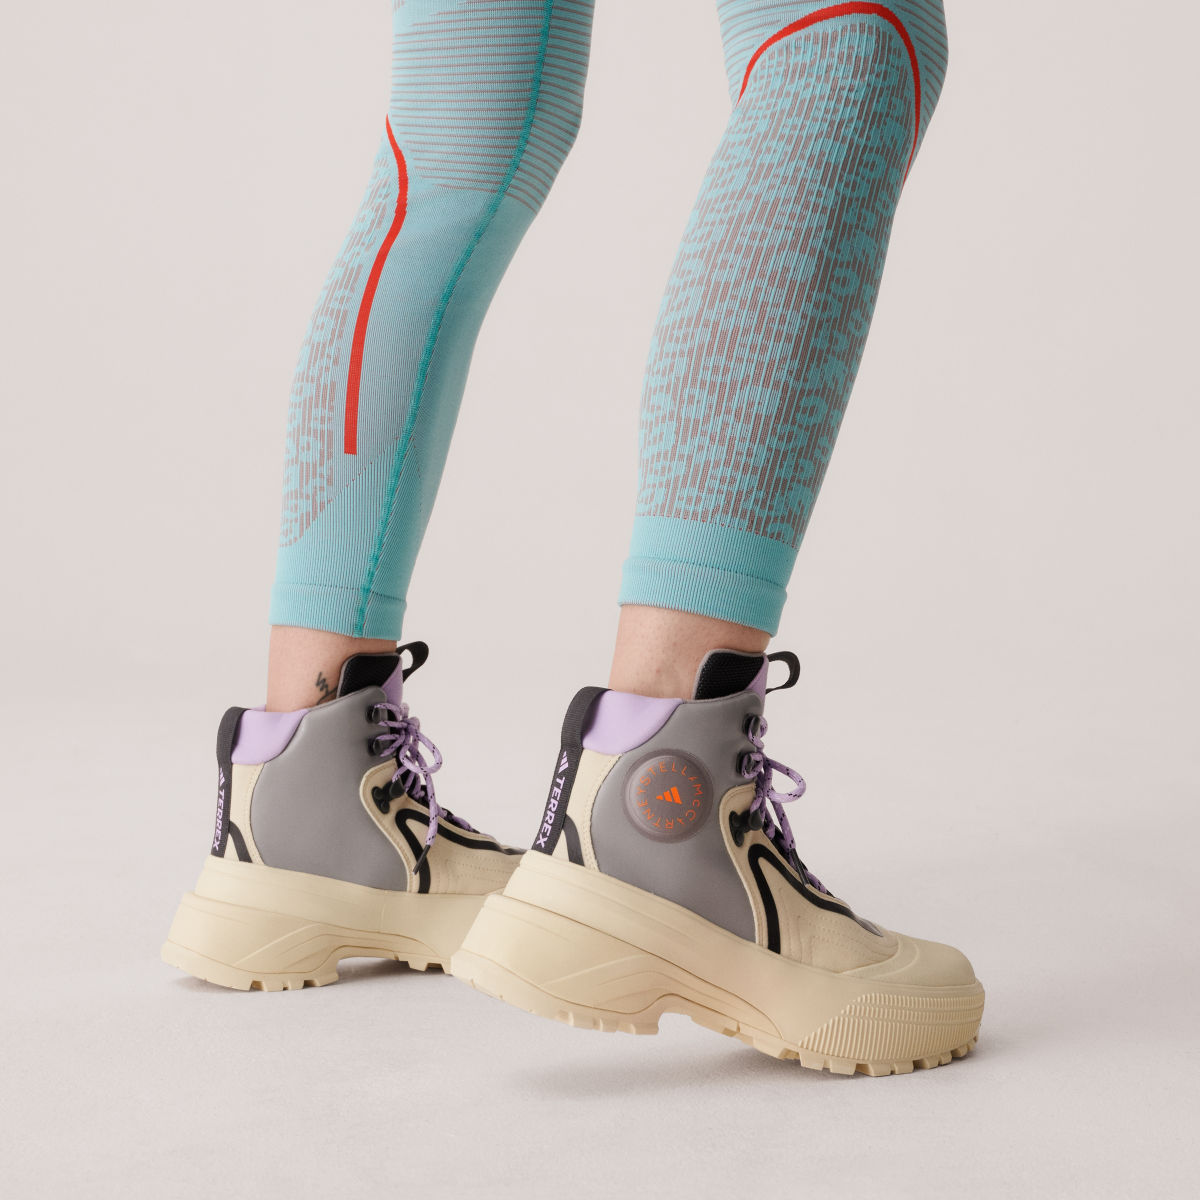 Adidas Leggings sem Costuras TrueStrength adidas by Stella McCartney. 8